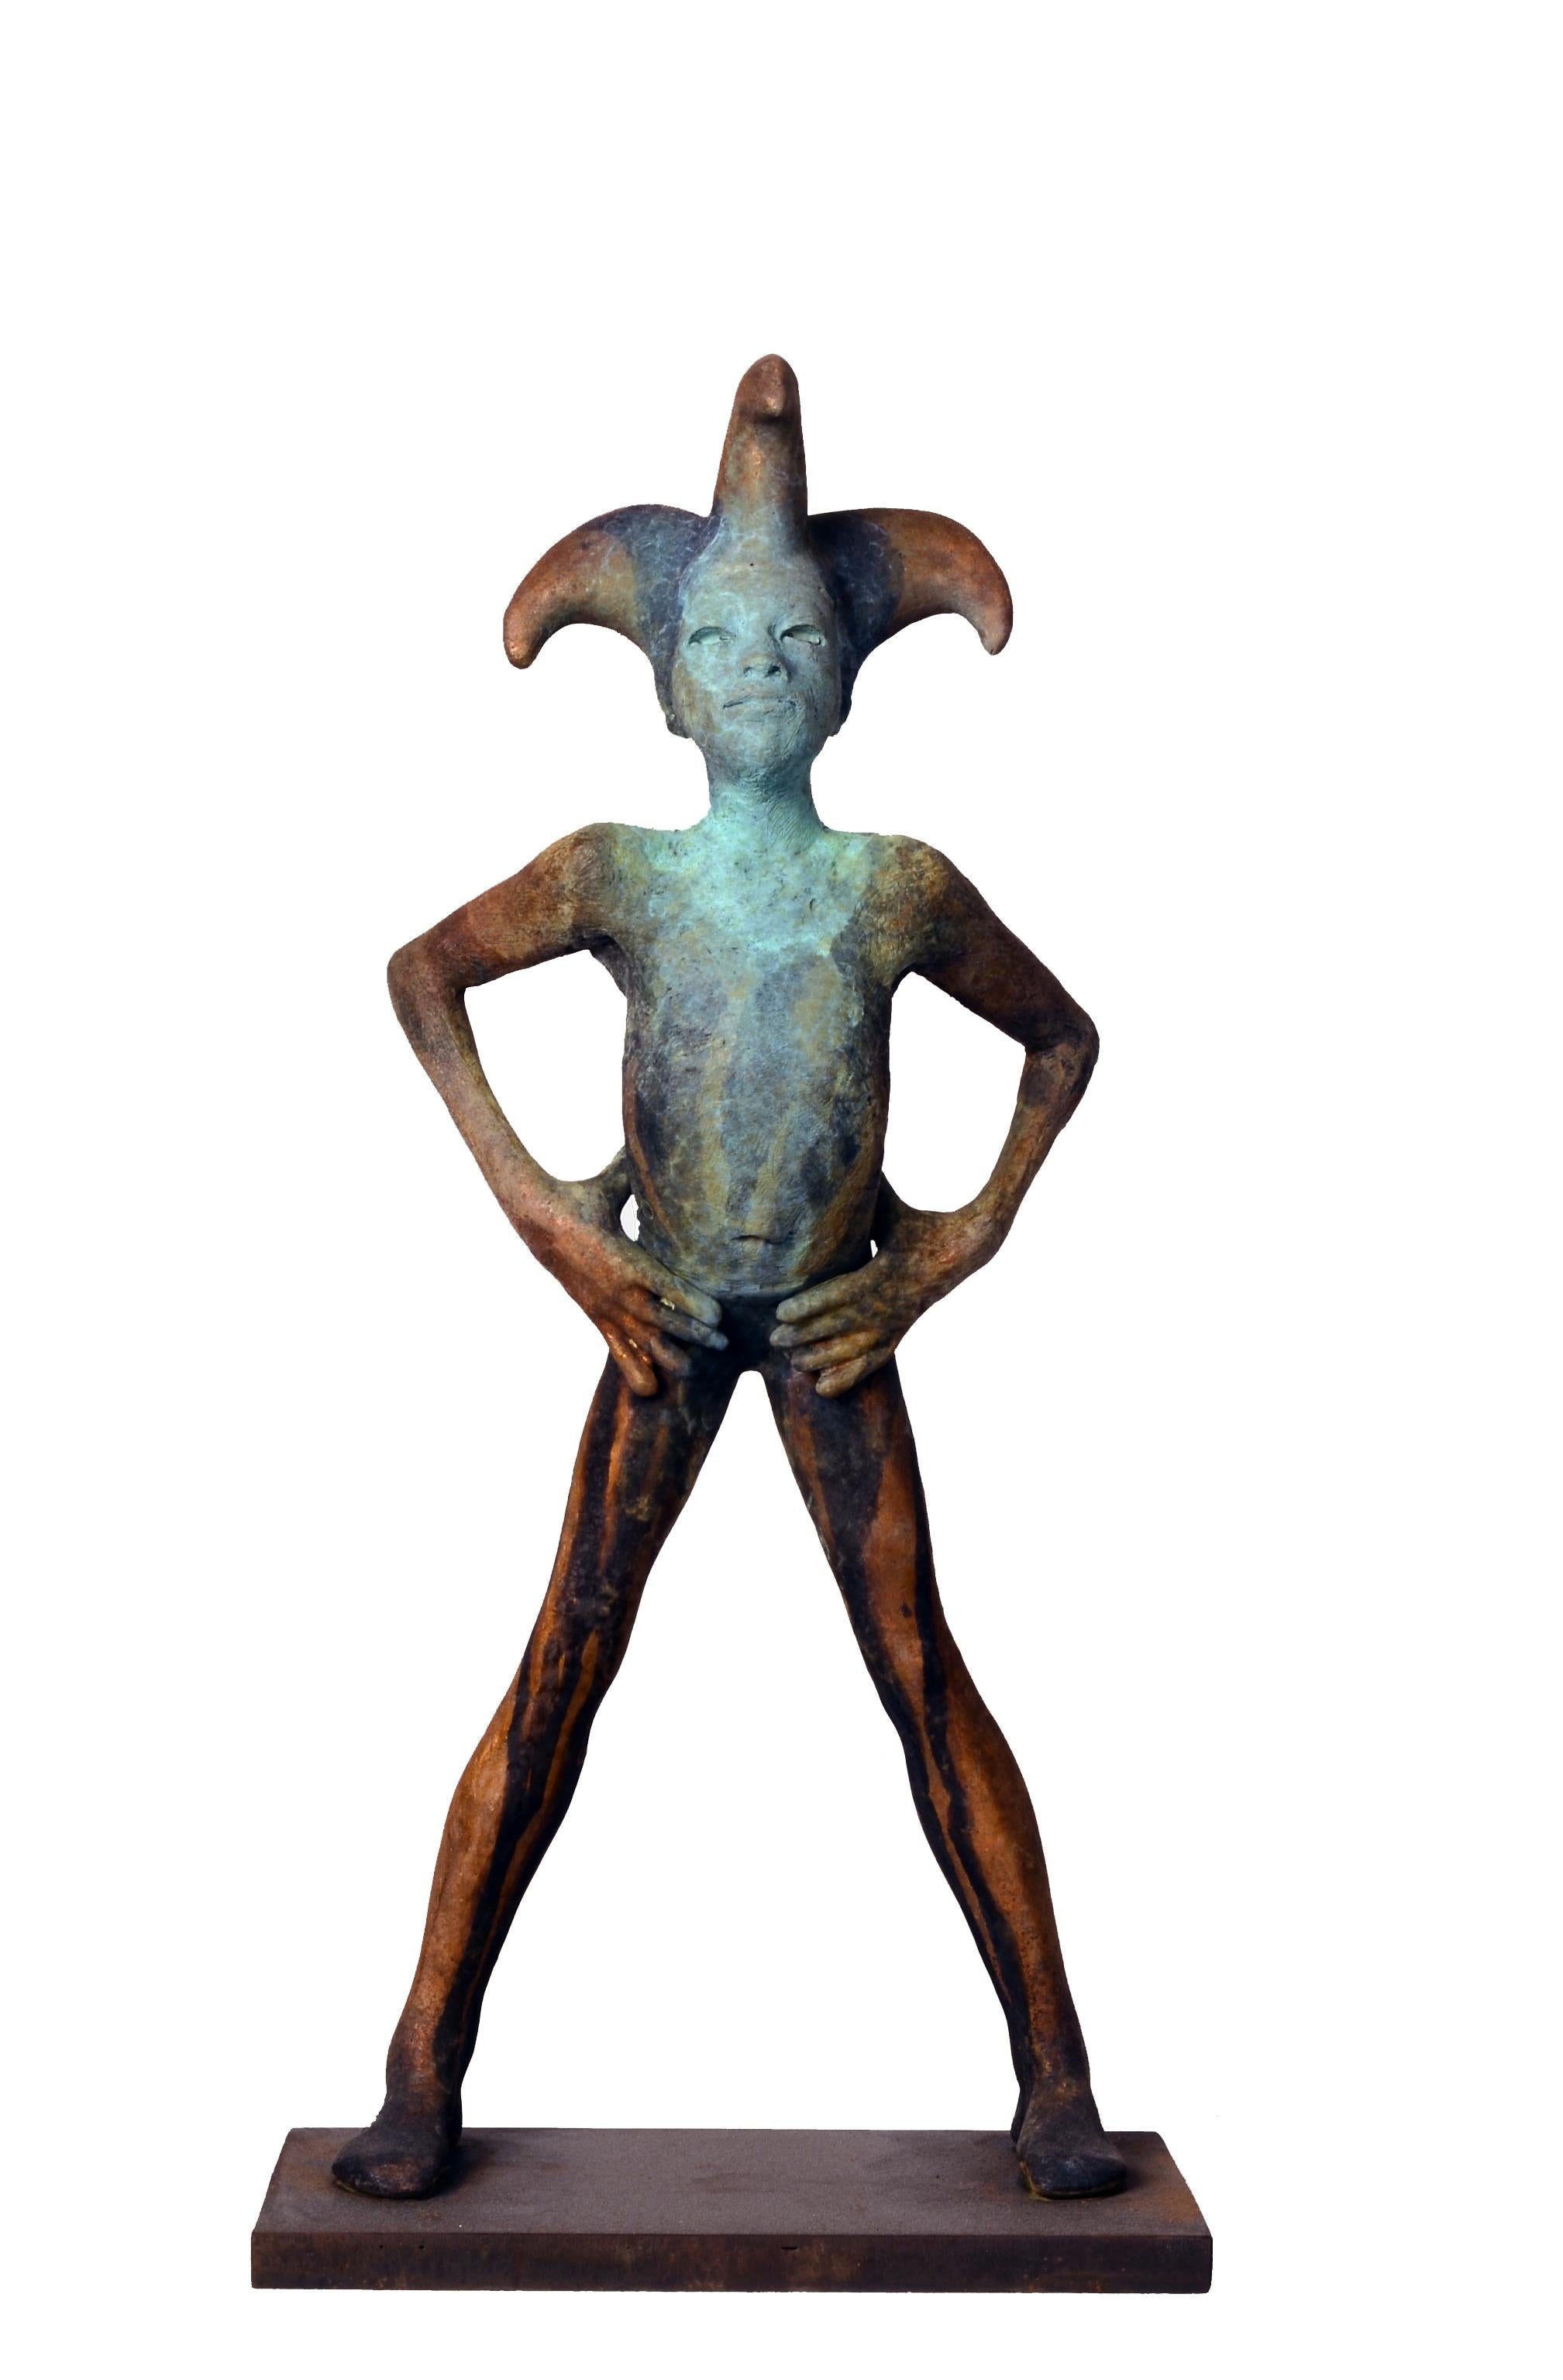 Jesus Curia Perez Nude Sculpture - Arlequin III - Bronze Commedia dell'arte Sculpture, Jester with Hands on Hips